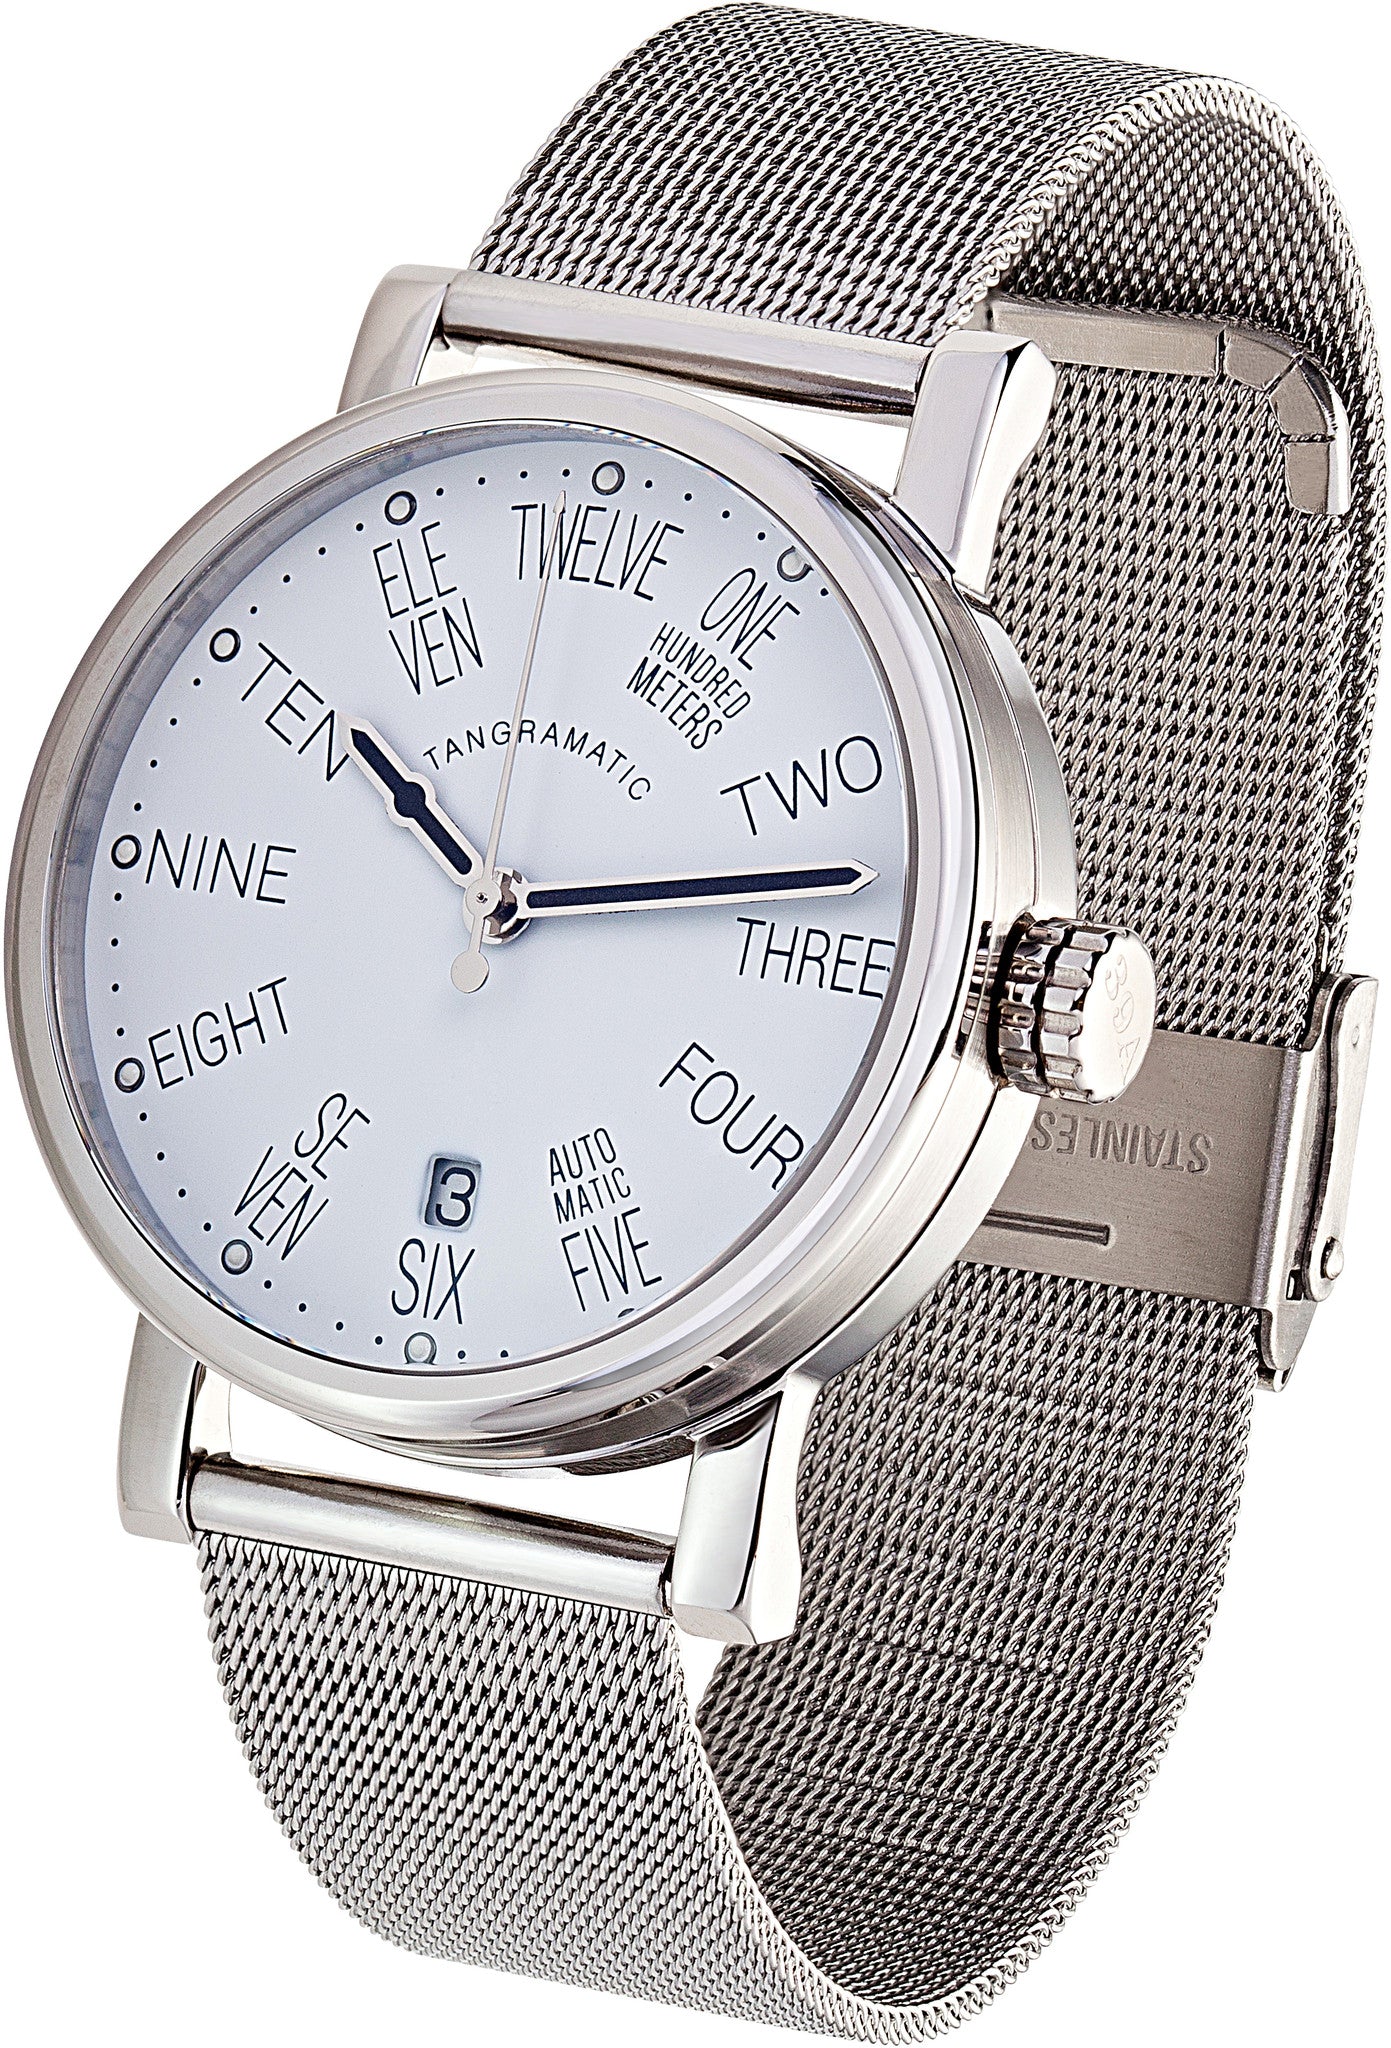 39mm Bauhaus White Automatic Watch | Tangramatic